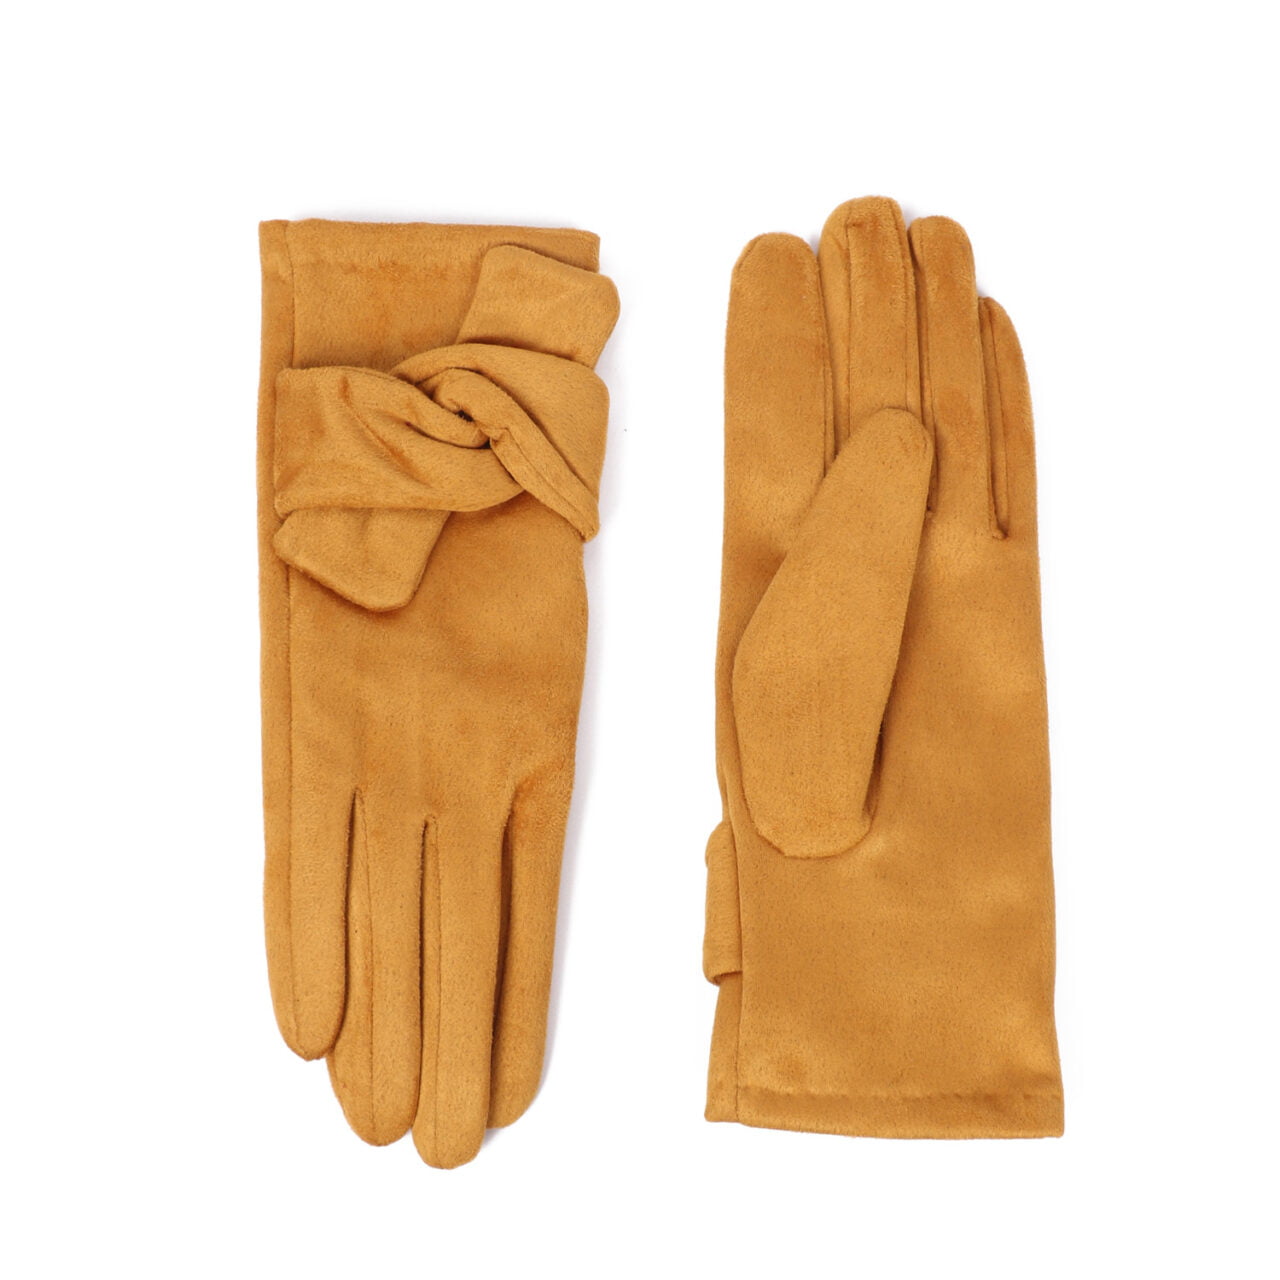 Fab Gifts | Winter Accessories Winter Gloves Alexandra cross-strap Mustard by Weirs of Baggot Street